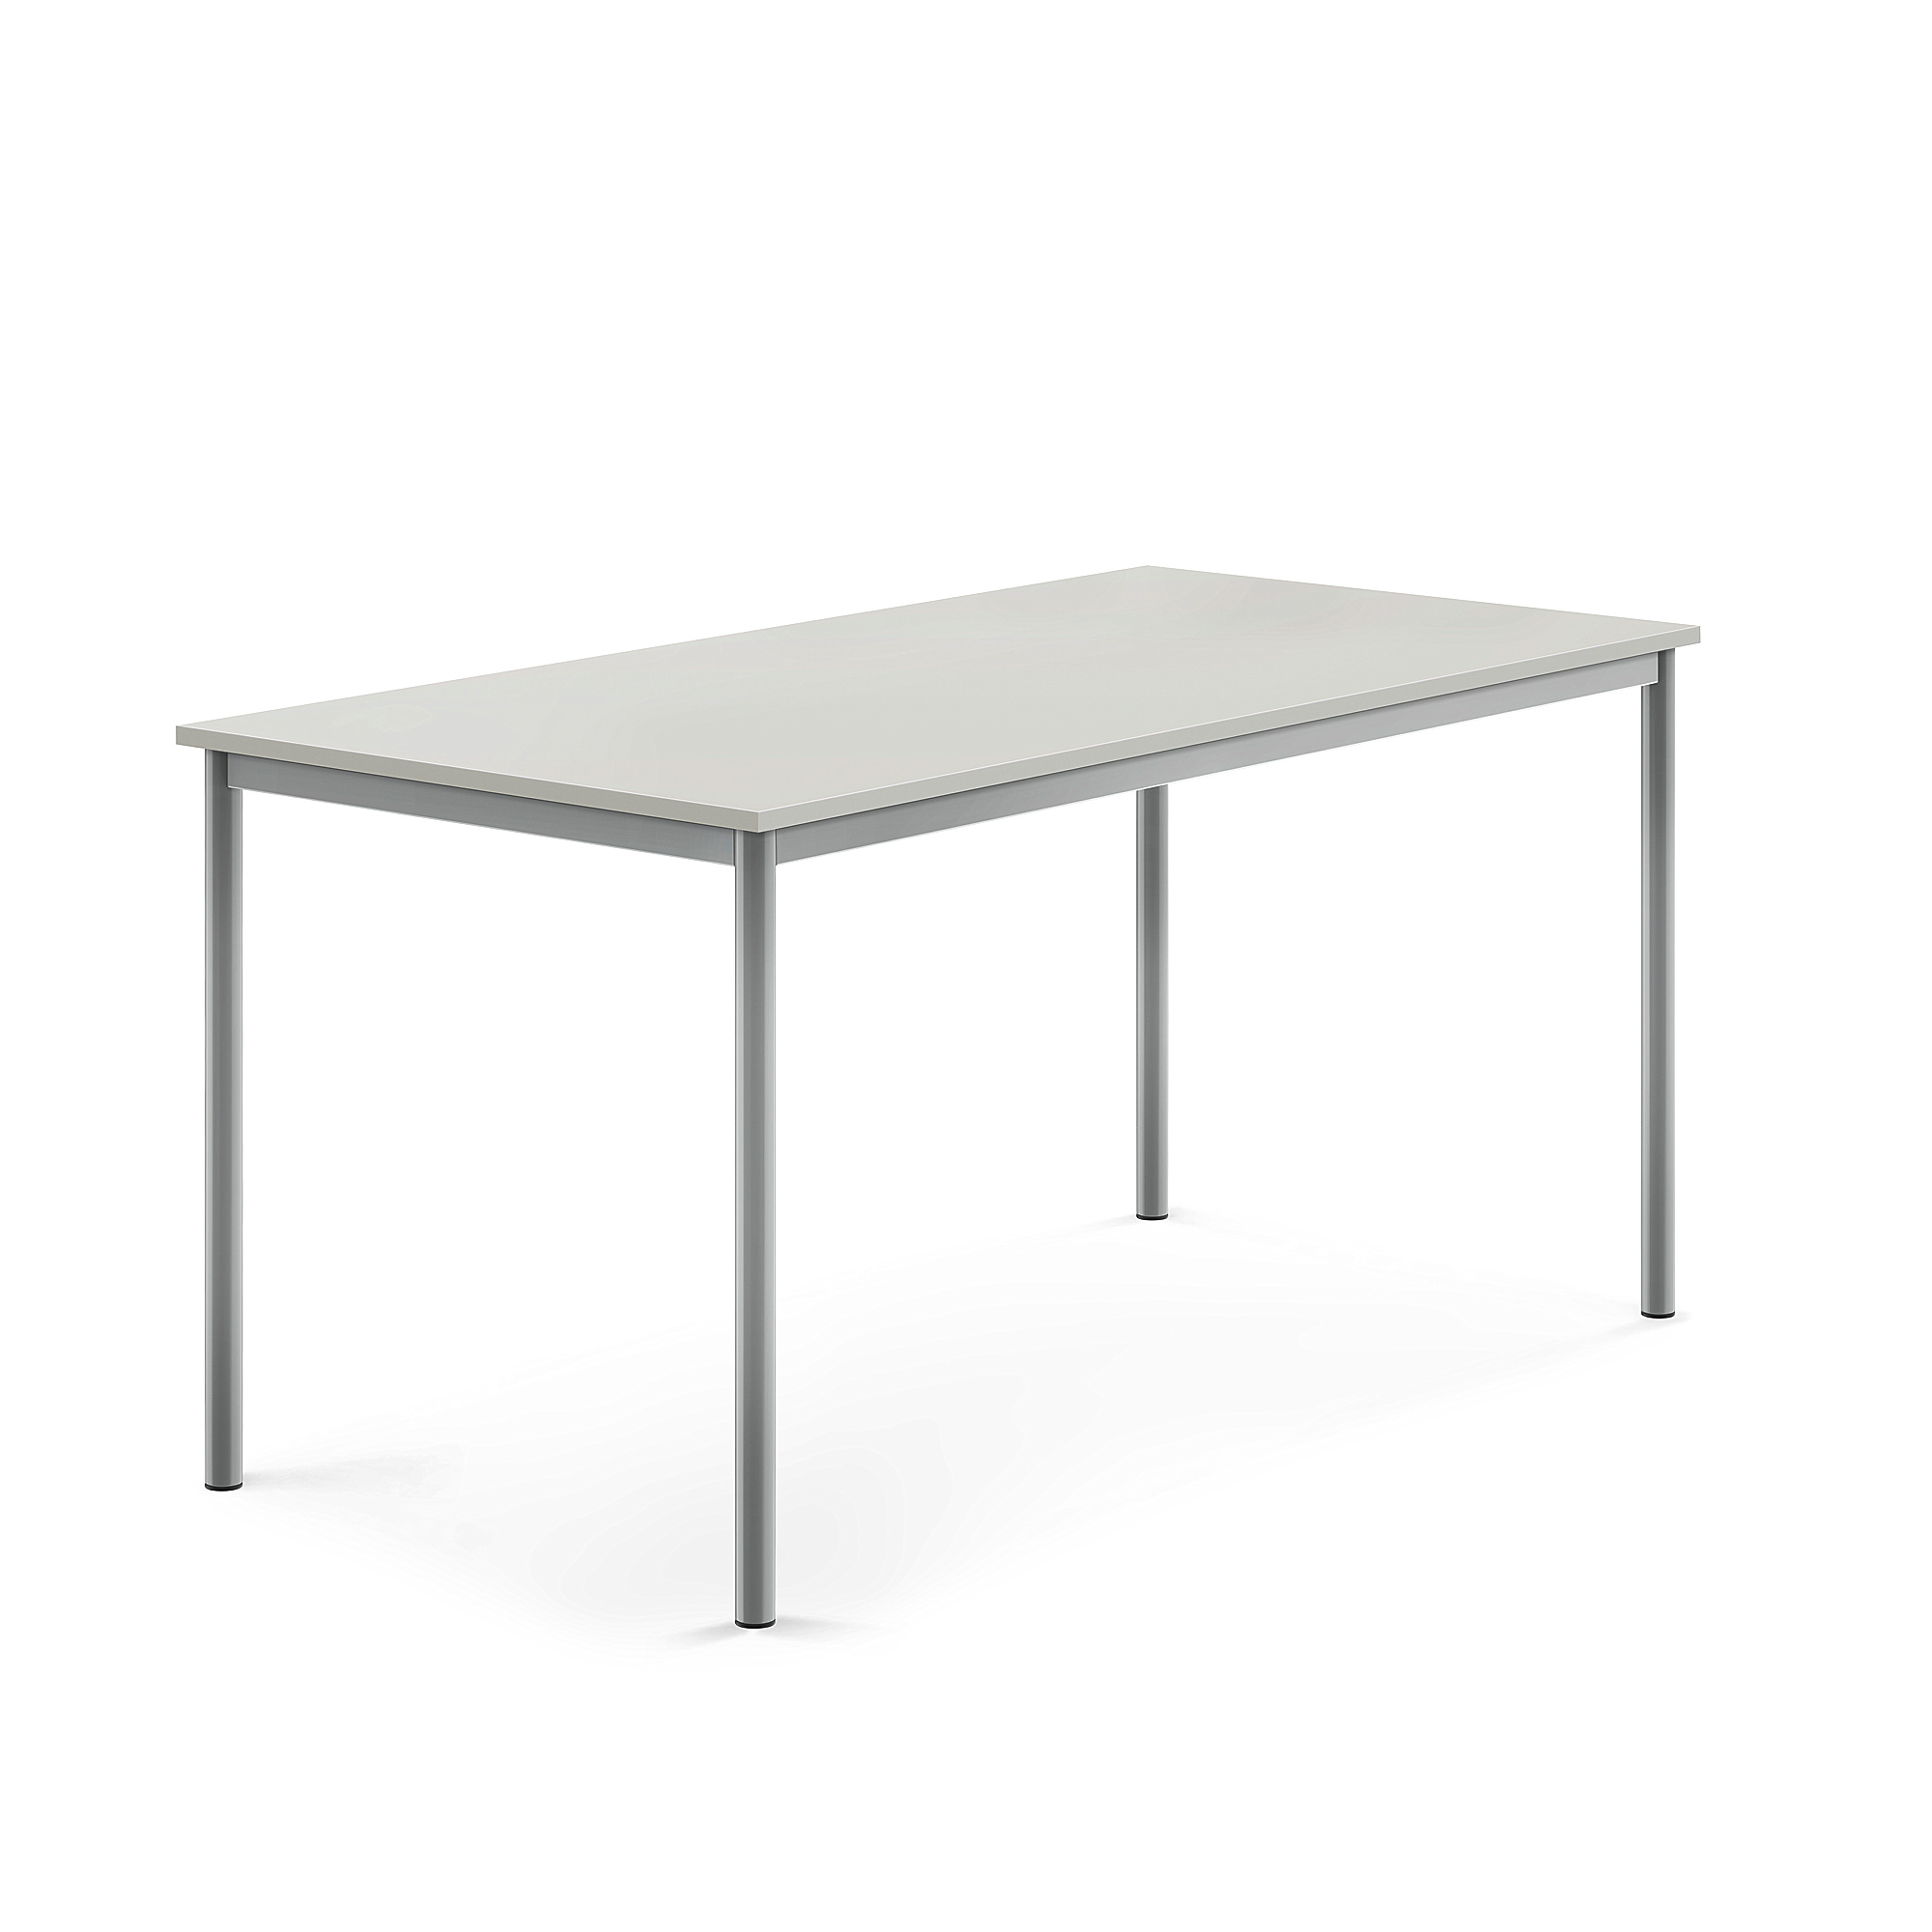 Stůl SONITUS, 1600x800x760 mm, stříbrné nohy, HPL deska tlumící hluk, šedá